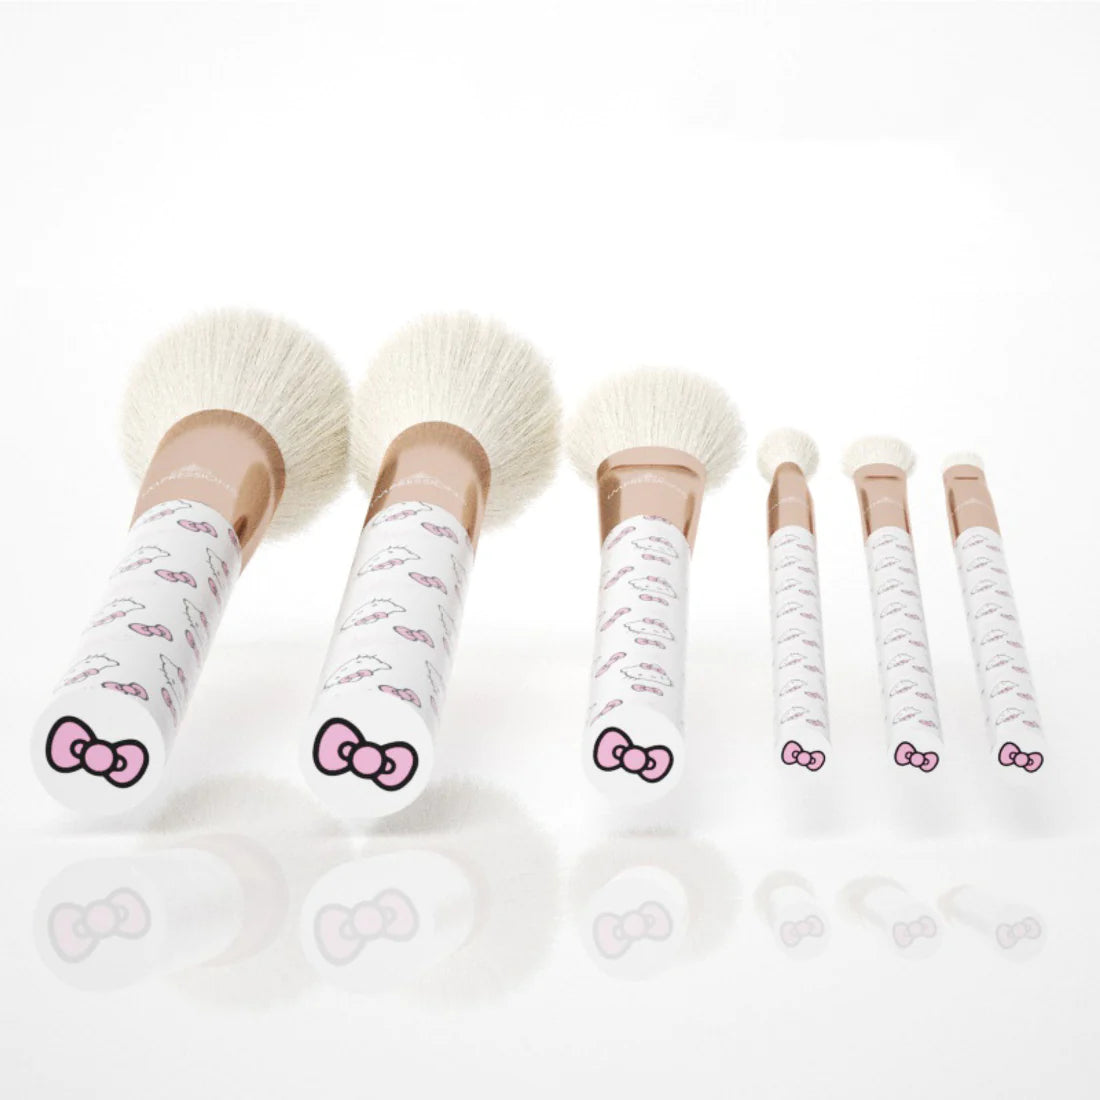 Impressions Vanity - Hello Kitty Supercute Signature 6pc Brush Set White